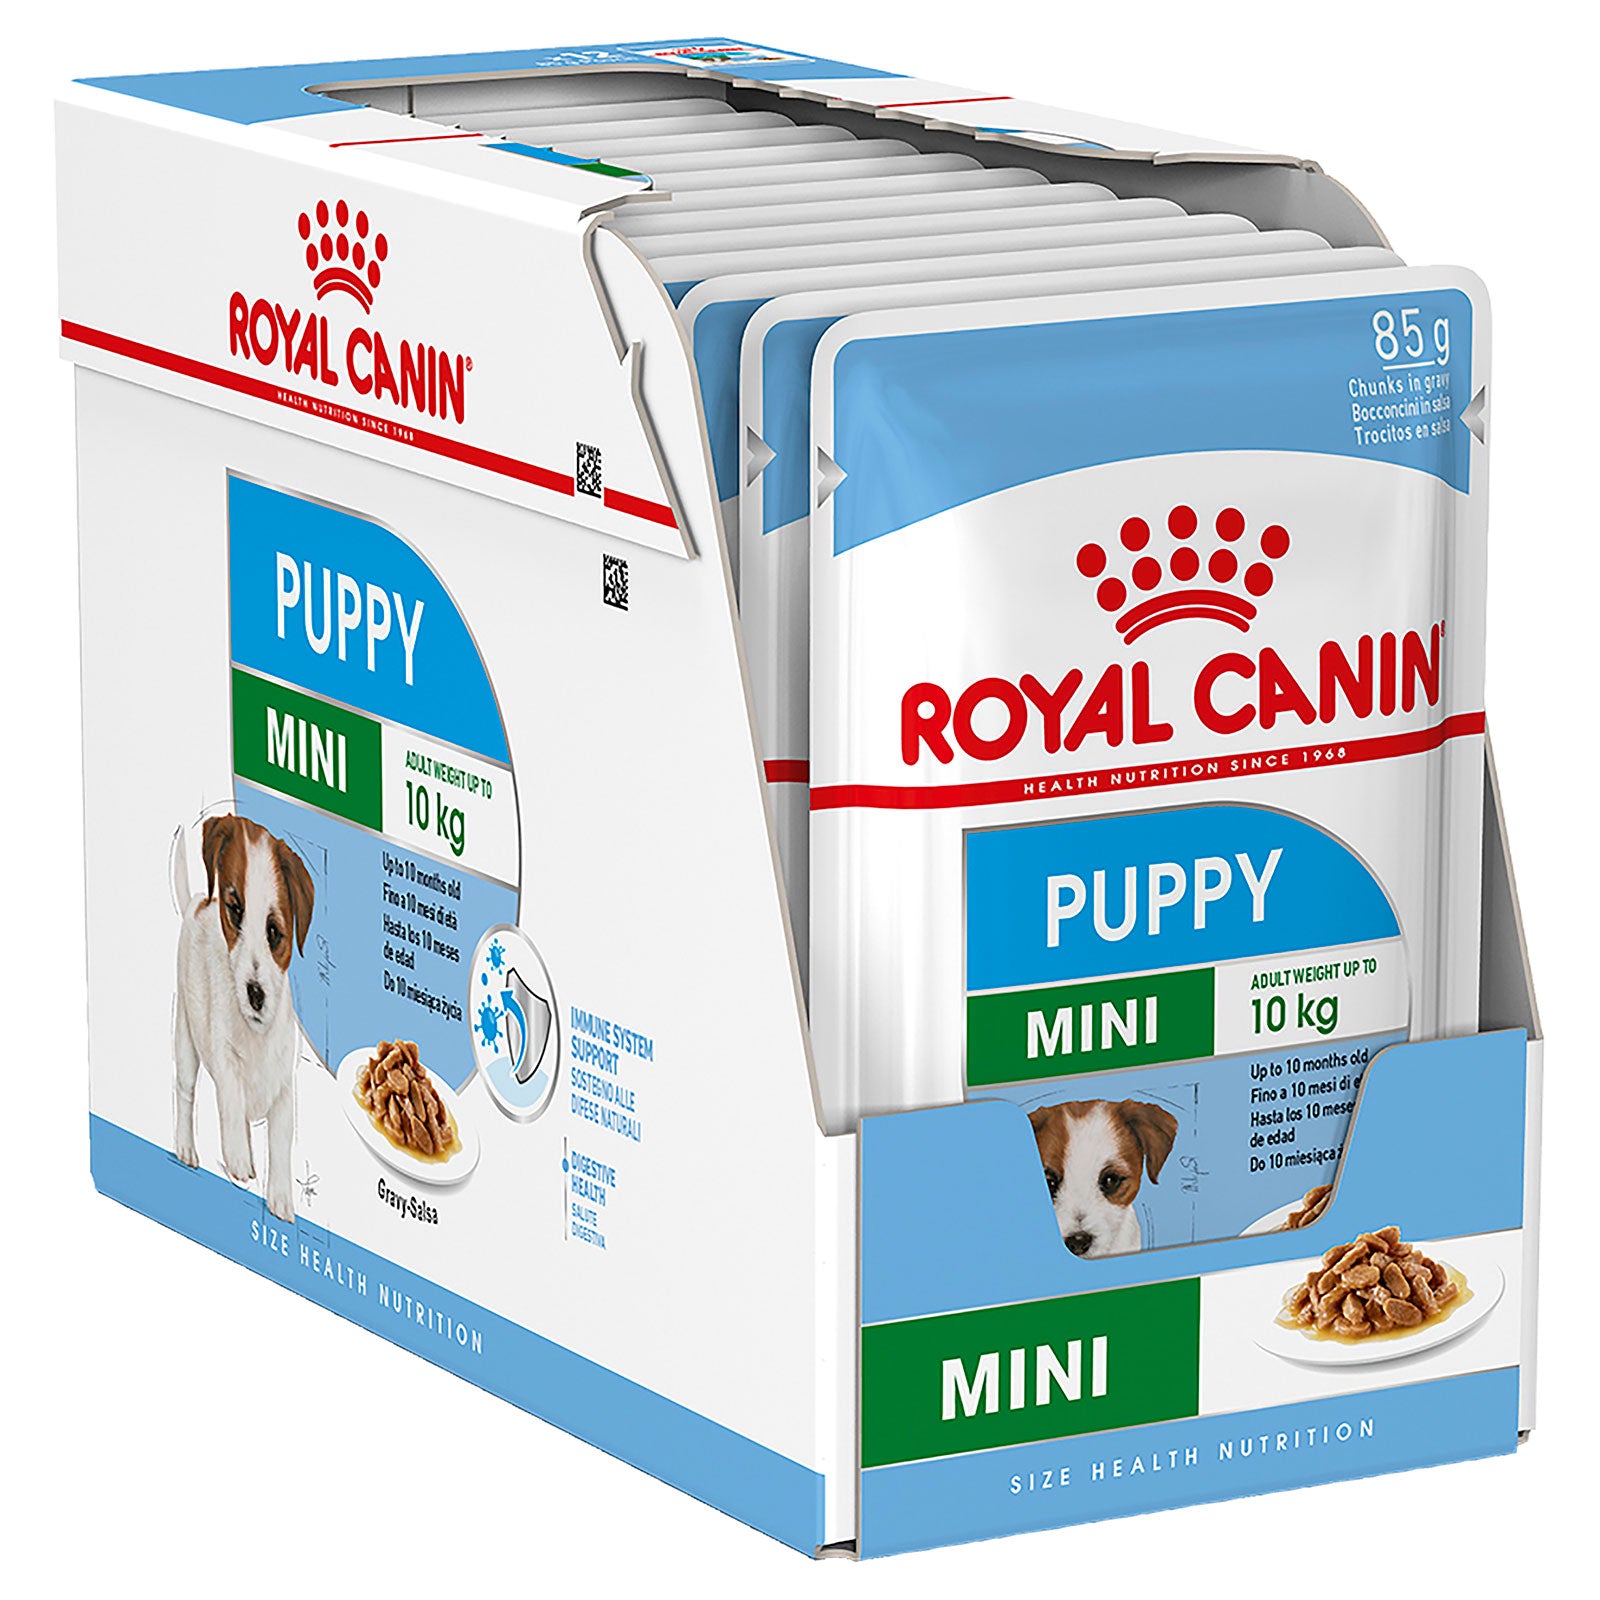 Royal Canin Dog Food Pouch Puppy Mini